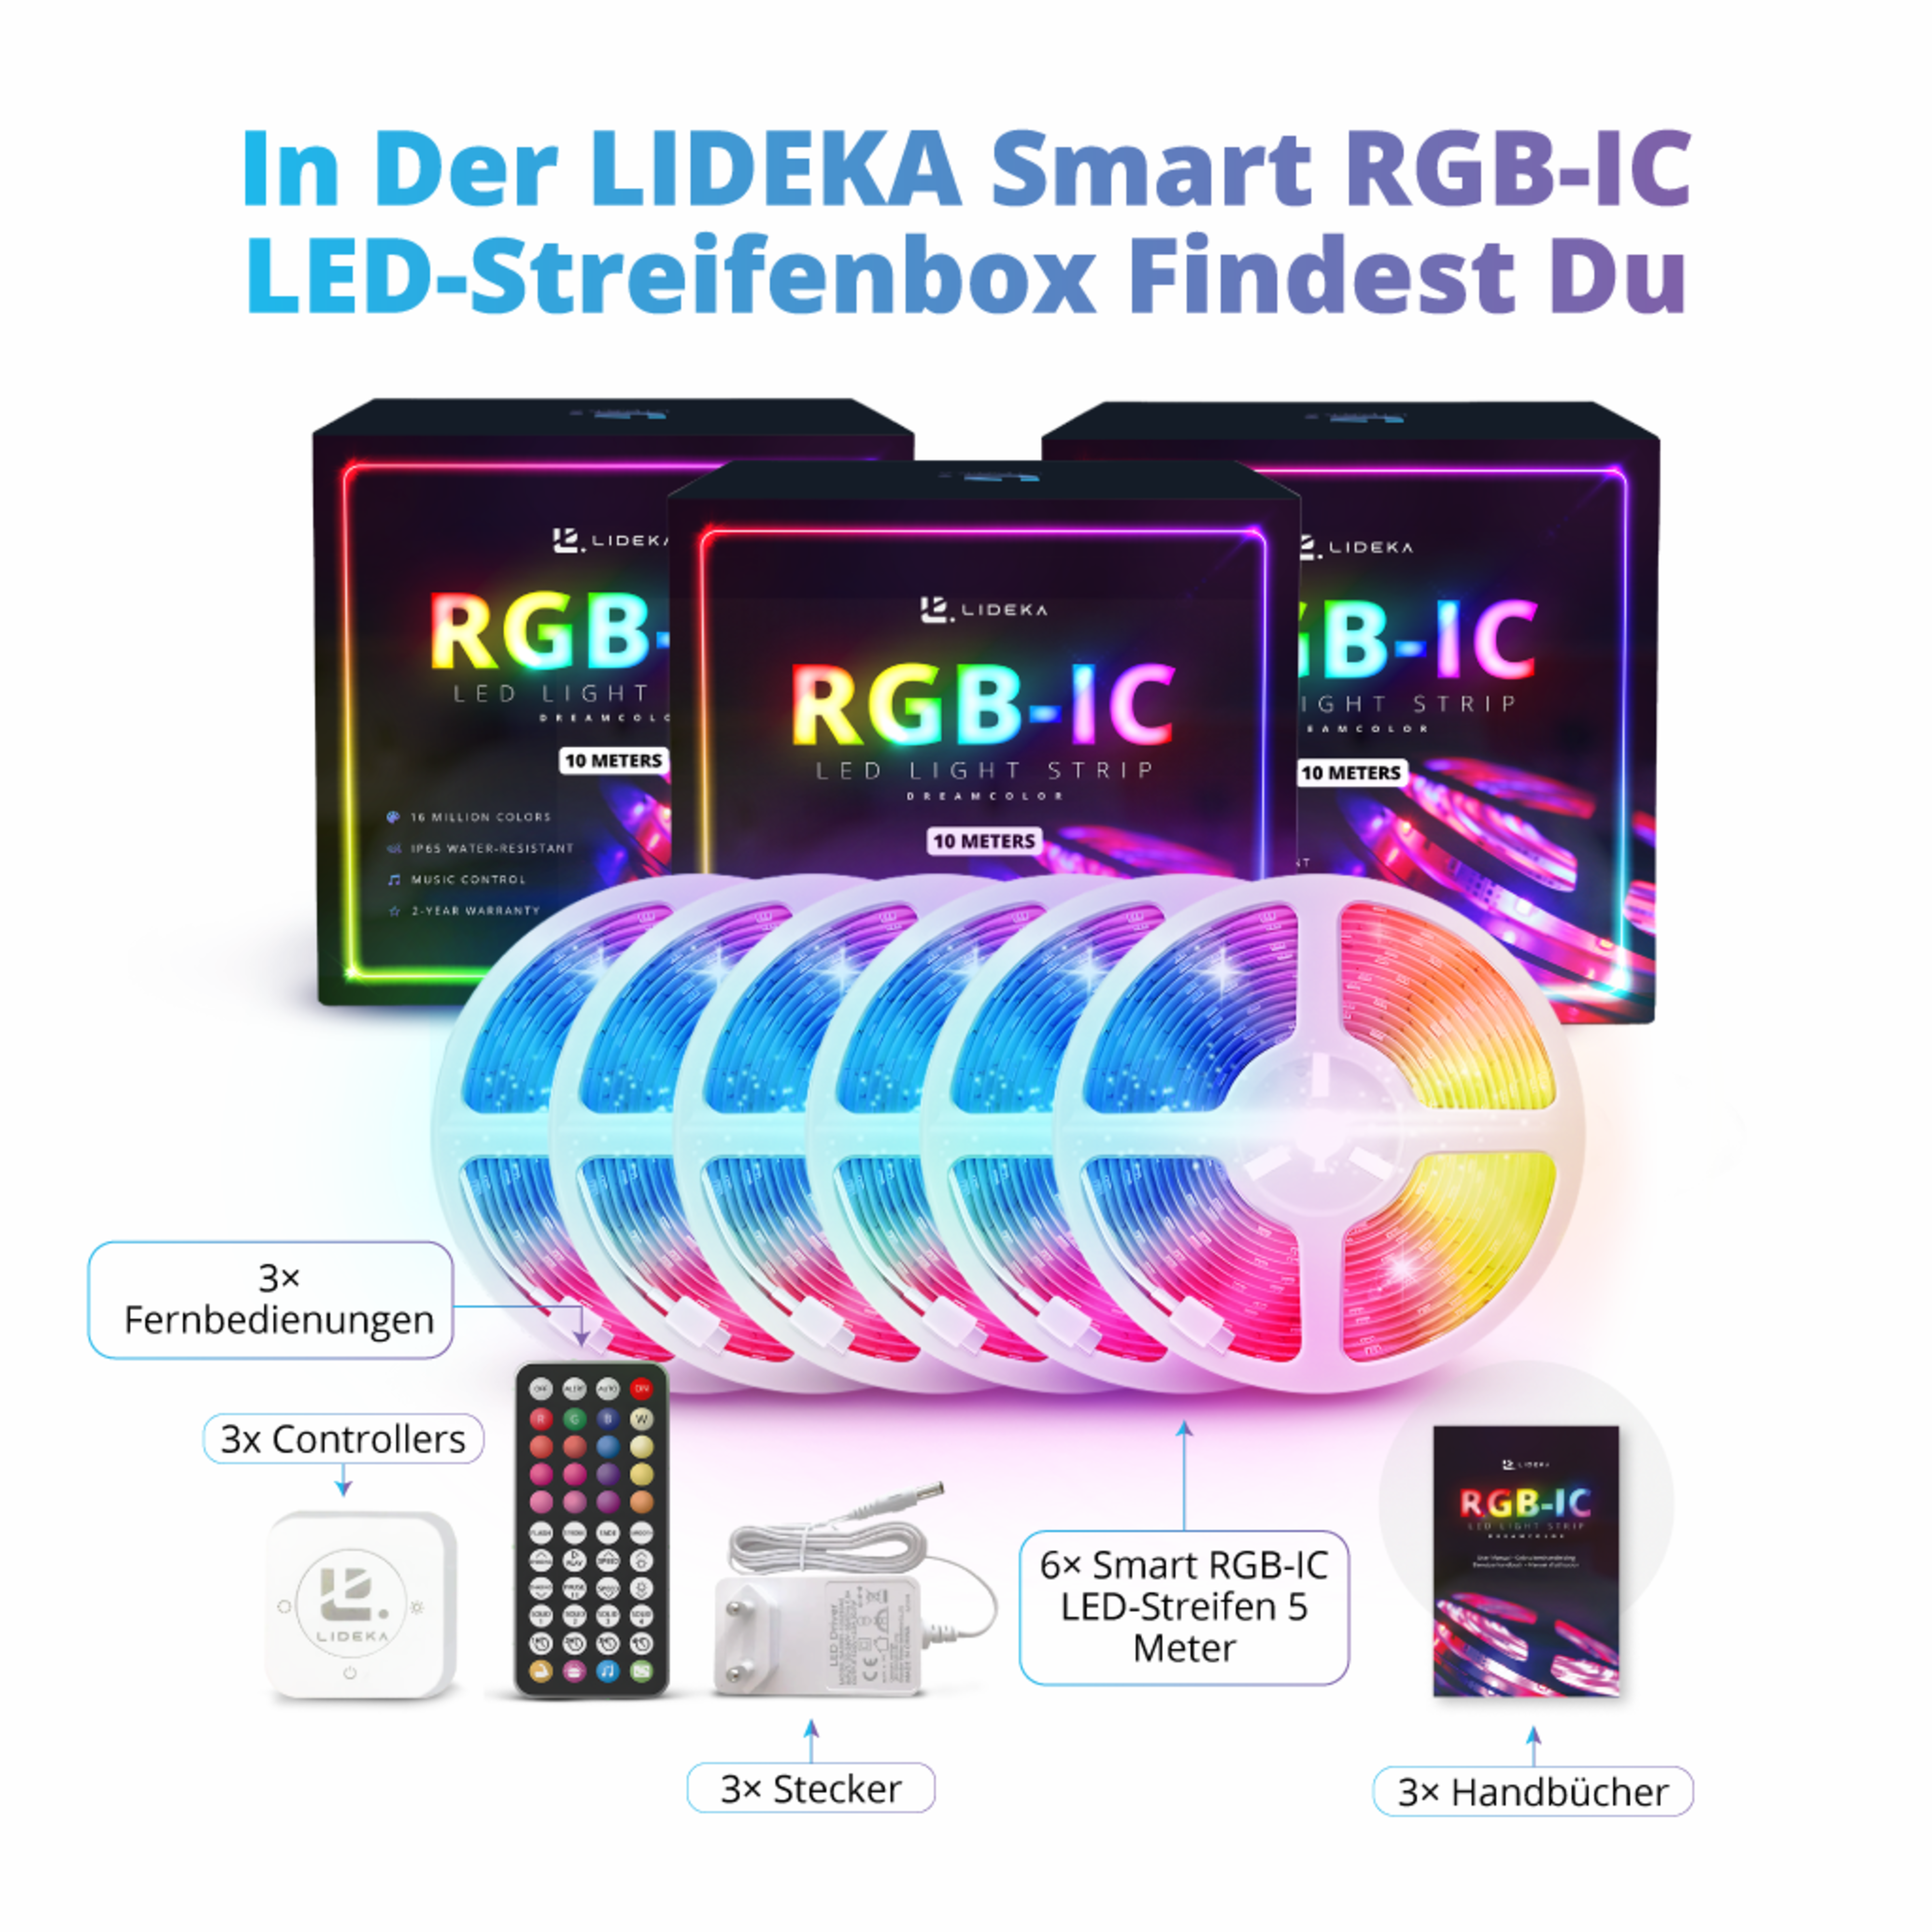 LIDEKA LED-Streifen LED Regenbogen strips RGBIC 30m Multicolors